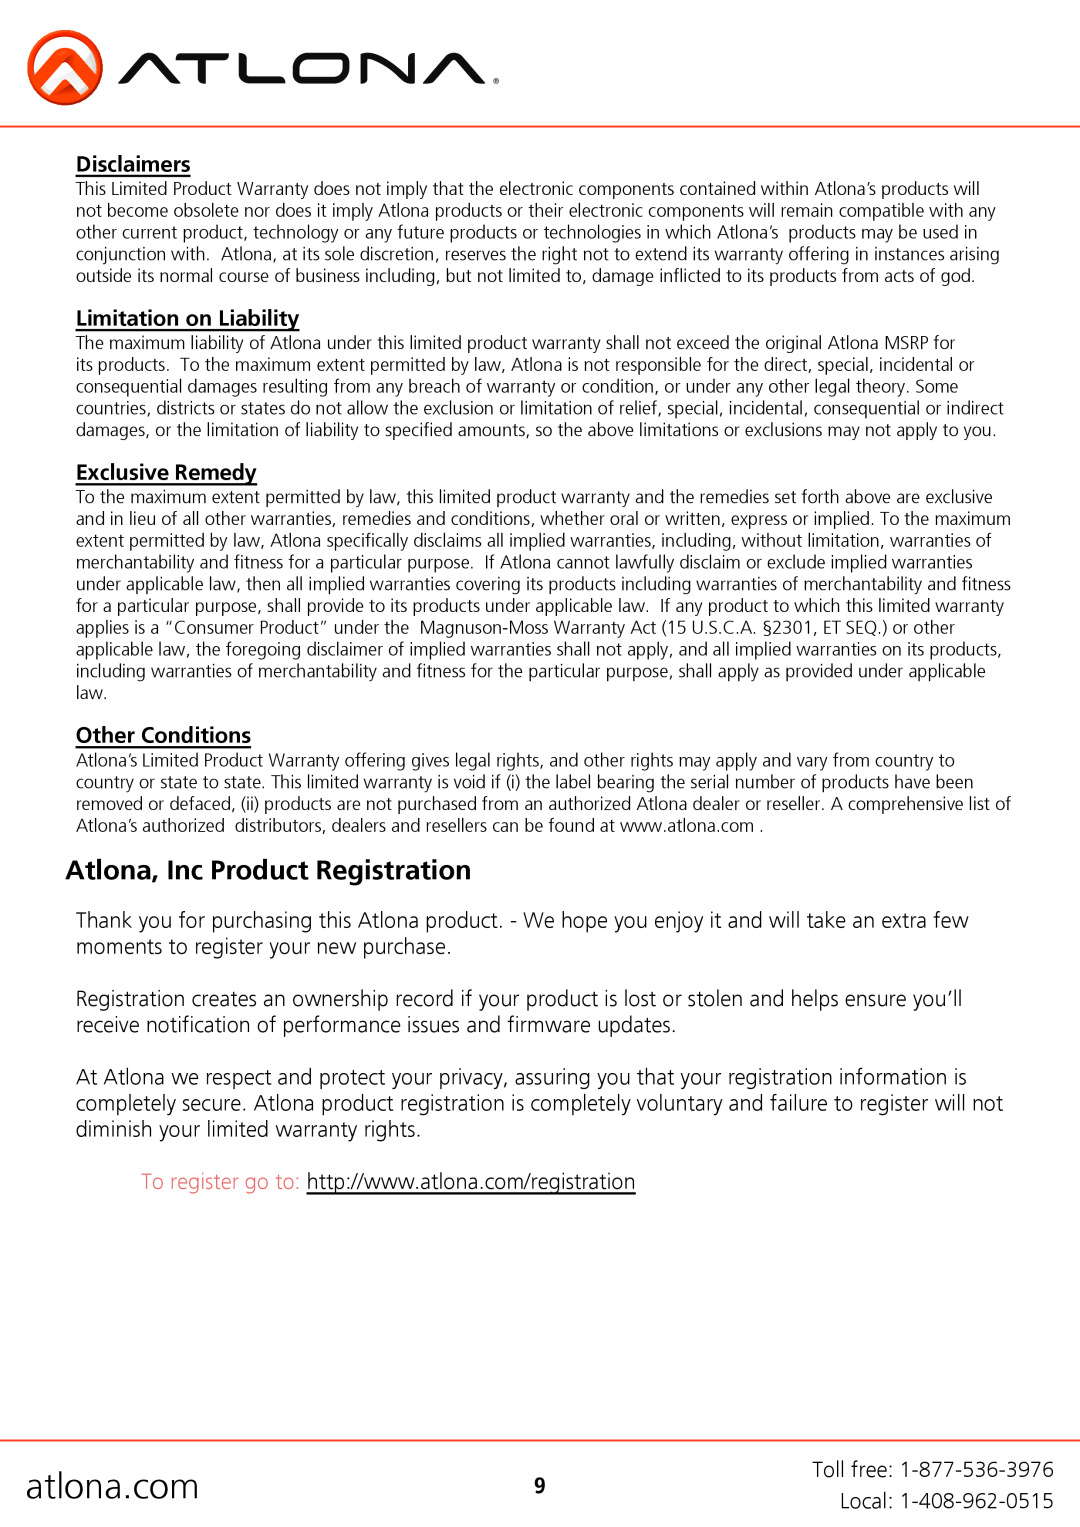 Atlona AT-HDDA-2 Atlona, Inc Product Registration, atlona.com, Disclaimers, Limitation on Liability, Exclusive Remedy 